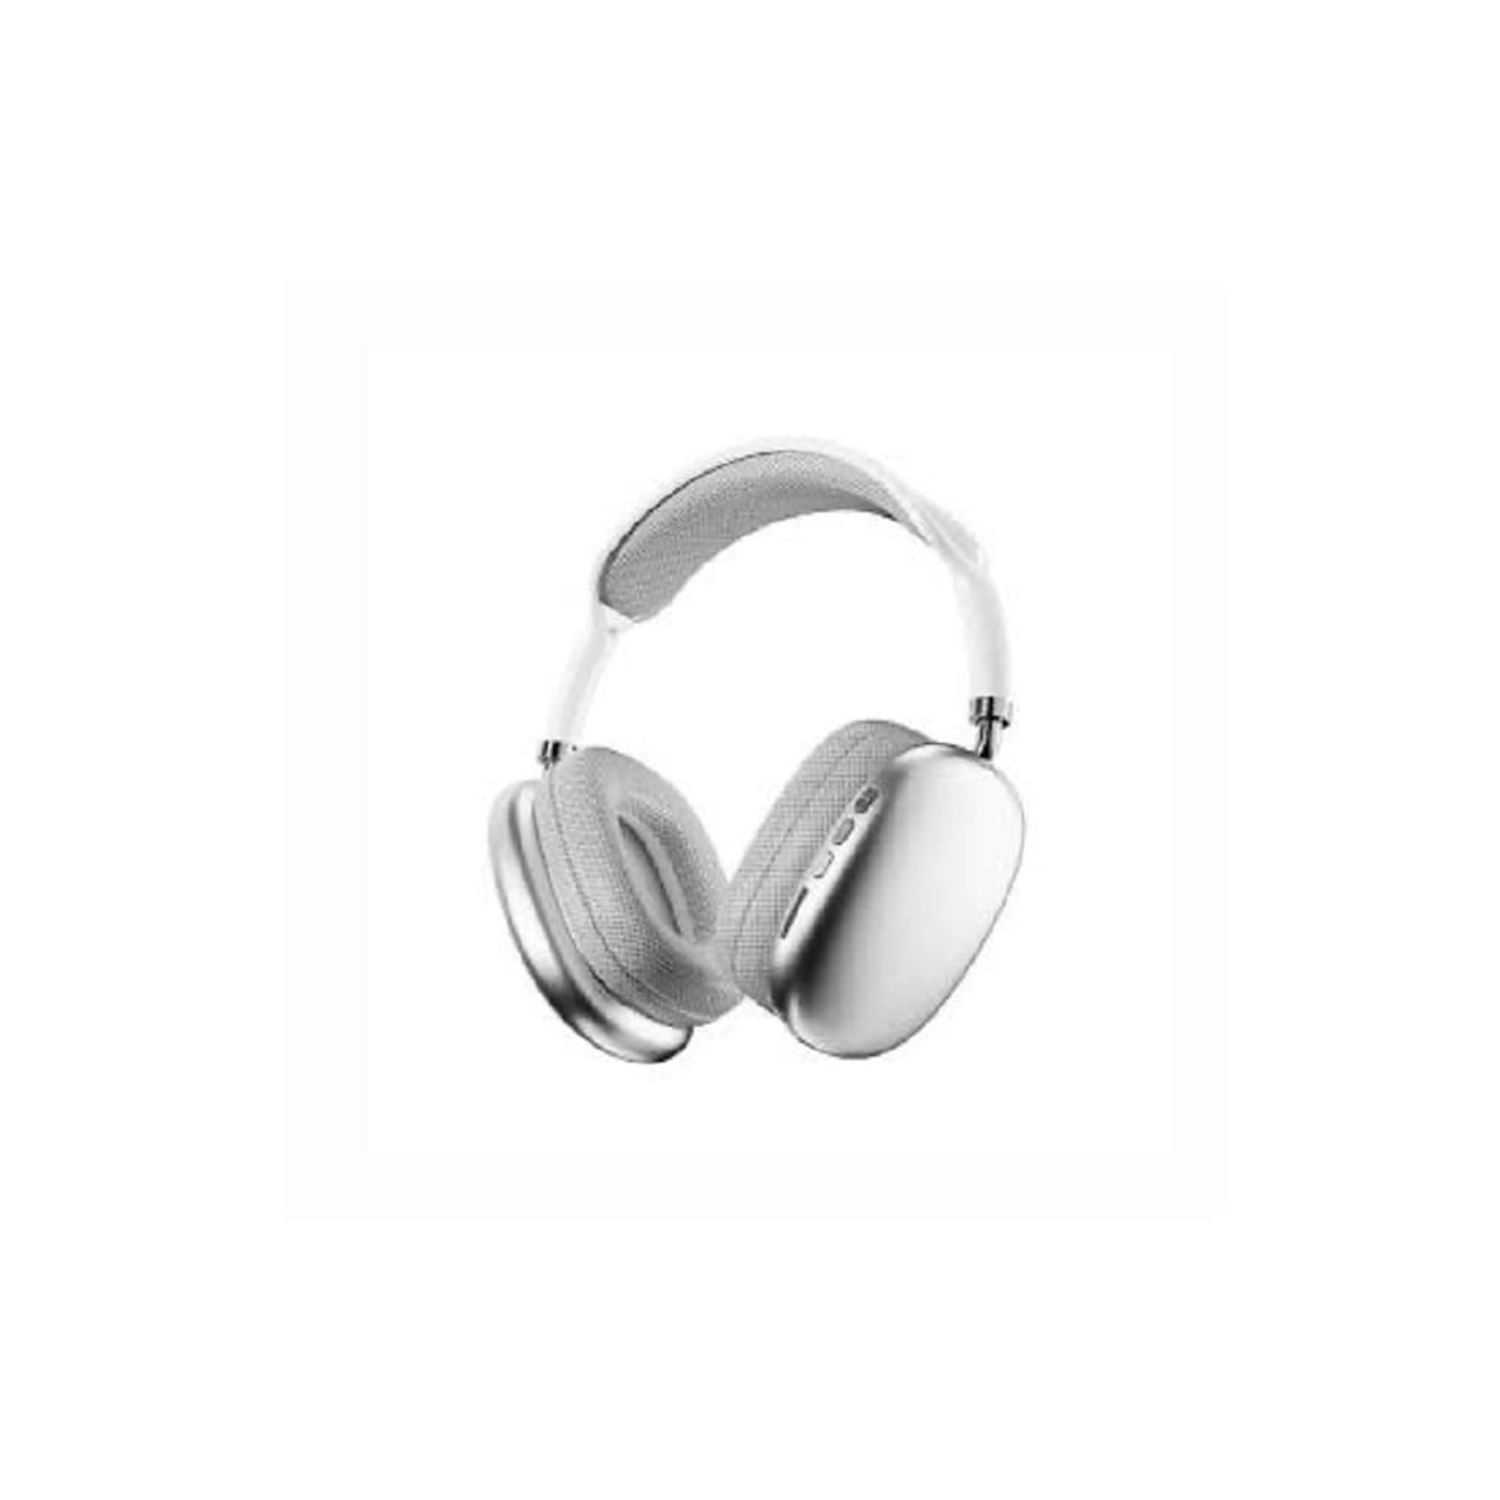 Audífonos Inalámbricos P9 Pro Max Rosado On Ear I Oechsle